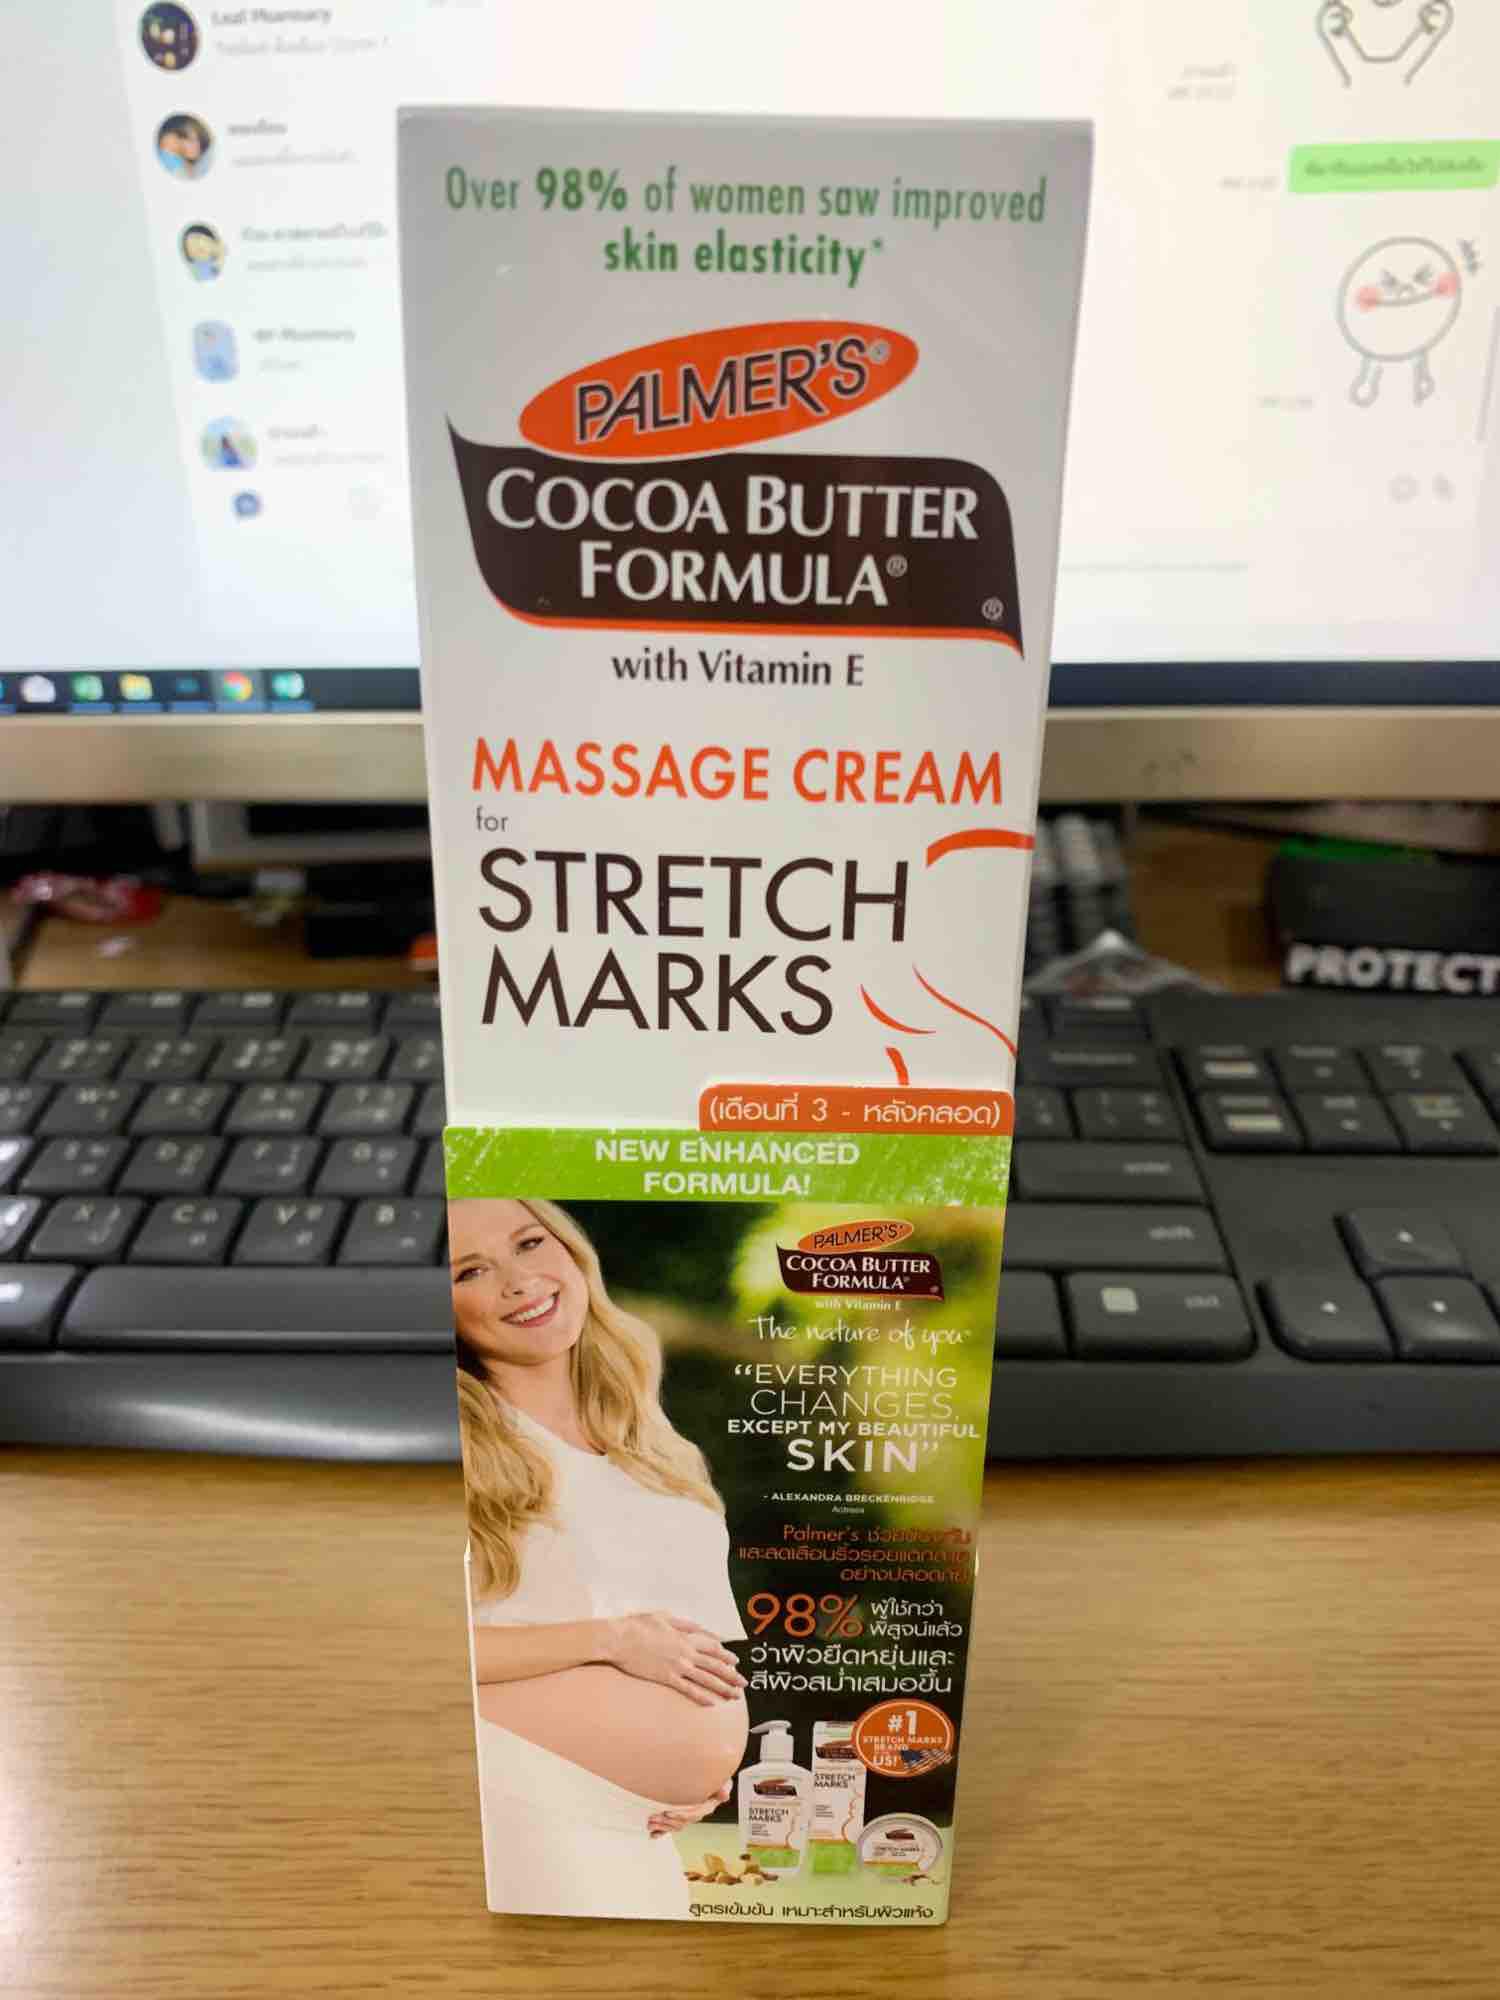 Palmer‘s Cocoa Butter Formular Massage Cream for Stretch Marks Month 3 125 g. ครีมป้องกันผิวแตกลายเนื่องจากการตั้งครรภ์ เหมาะสำหรับครรภ์ที่เริ่มเดือนที่ 3 1 หลอด